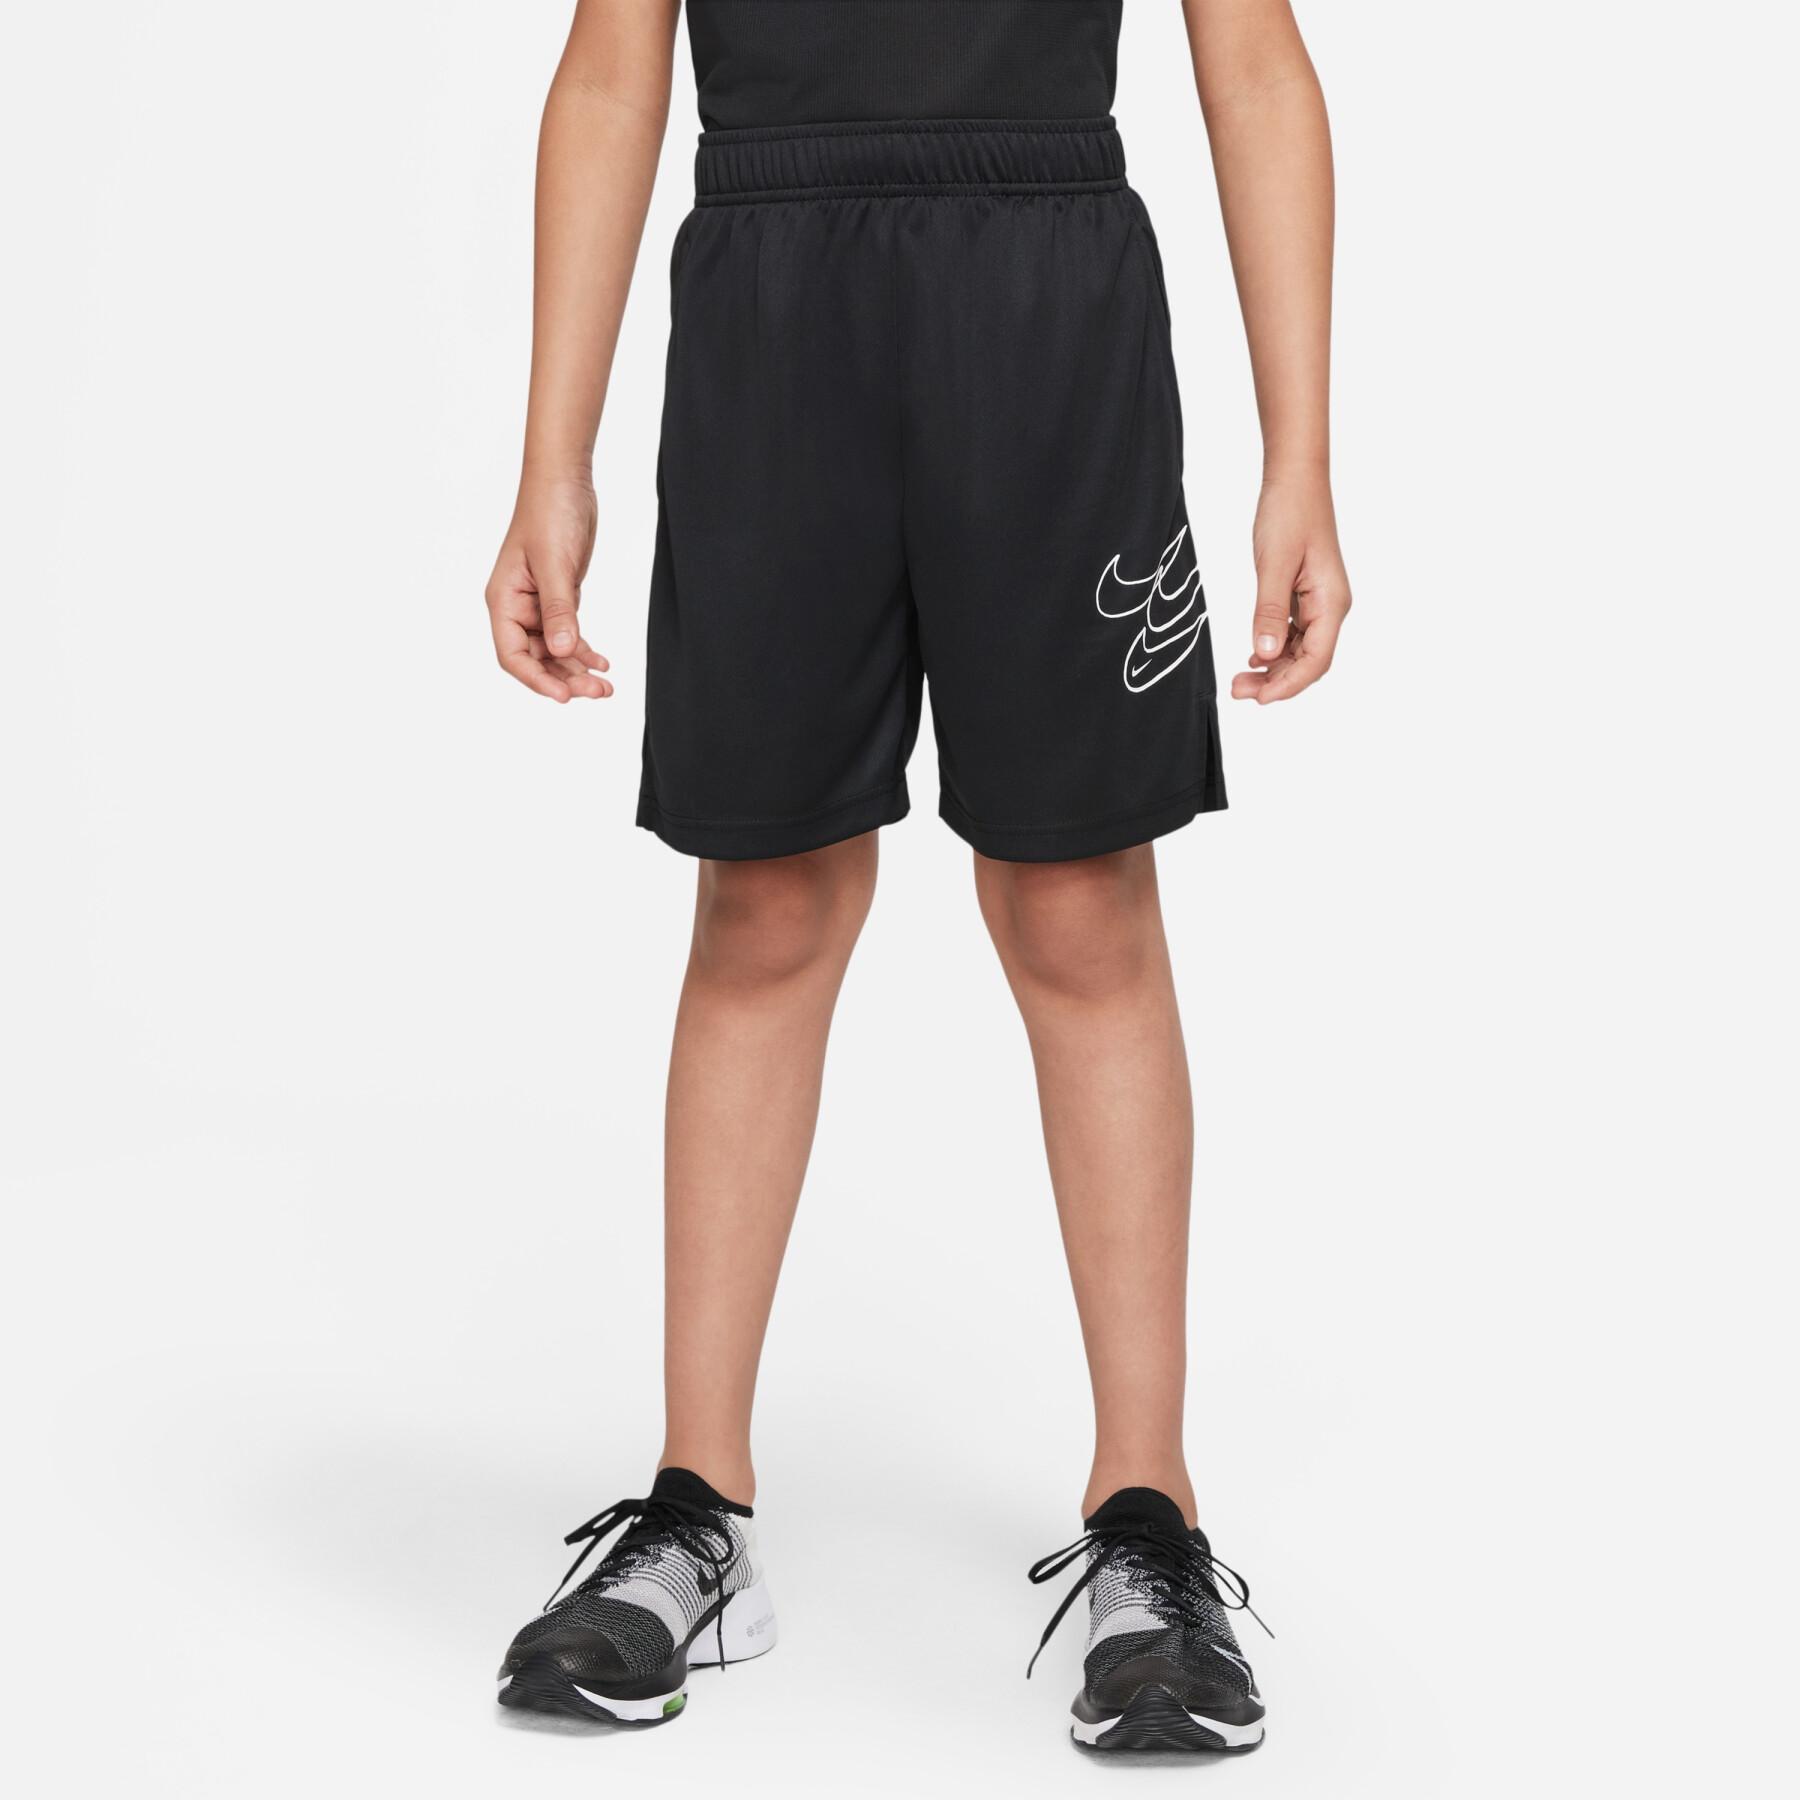 Kinder shorts Nike Collection